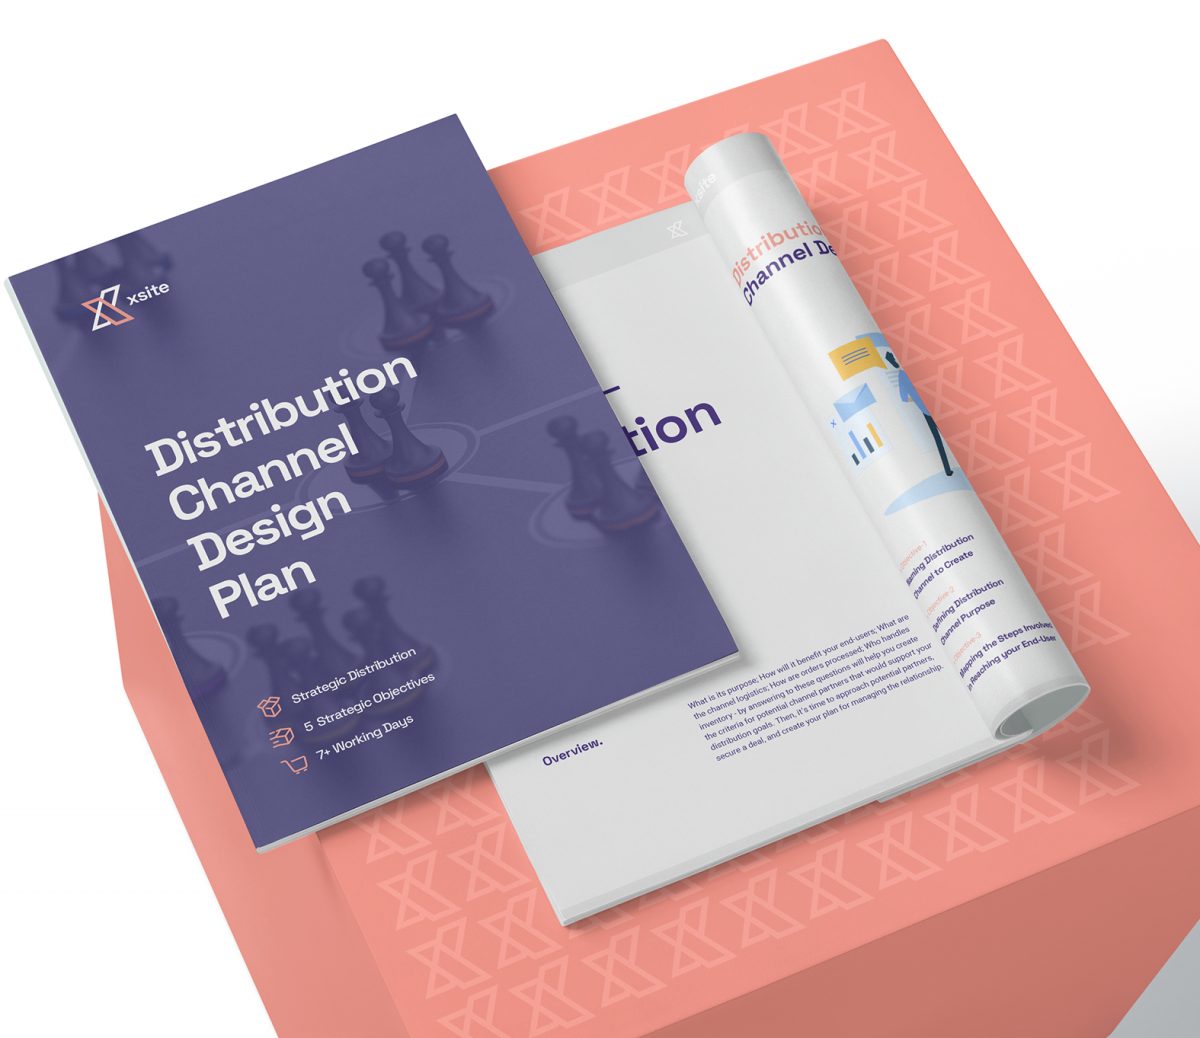 Distribution Channel Design Plan